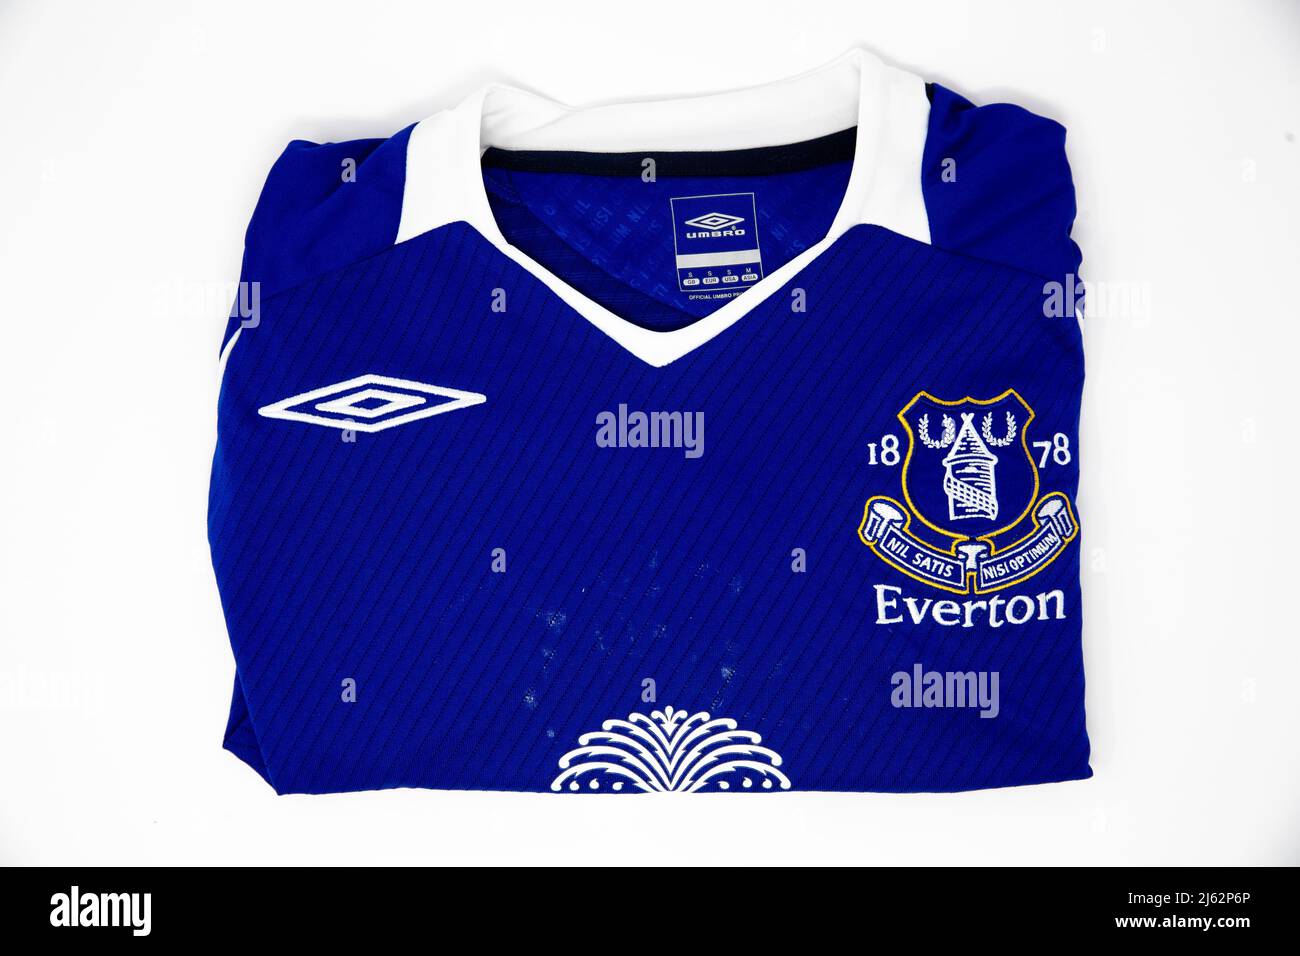 Everton Umbro Football Shirt Stock Photo